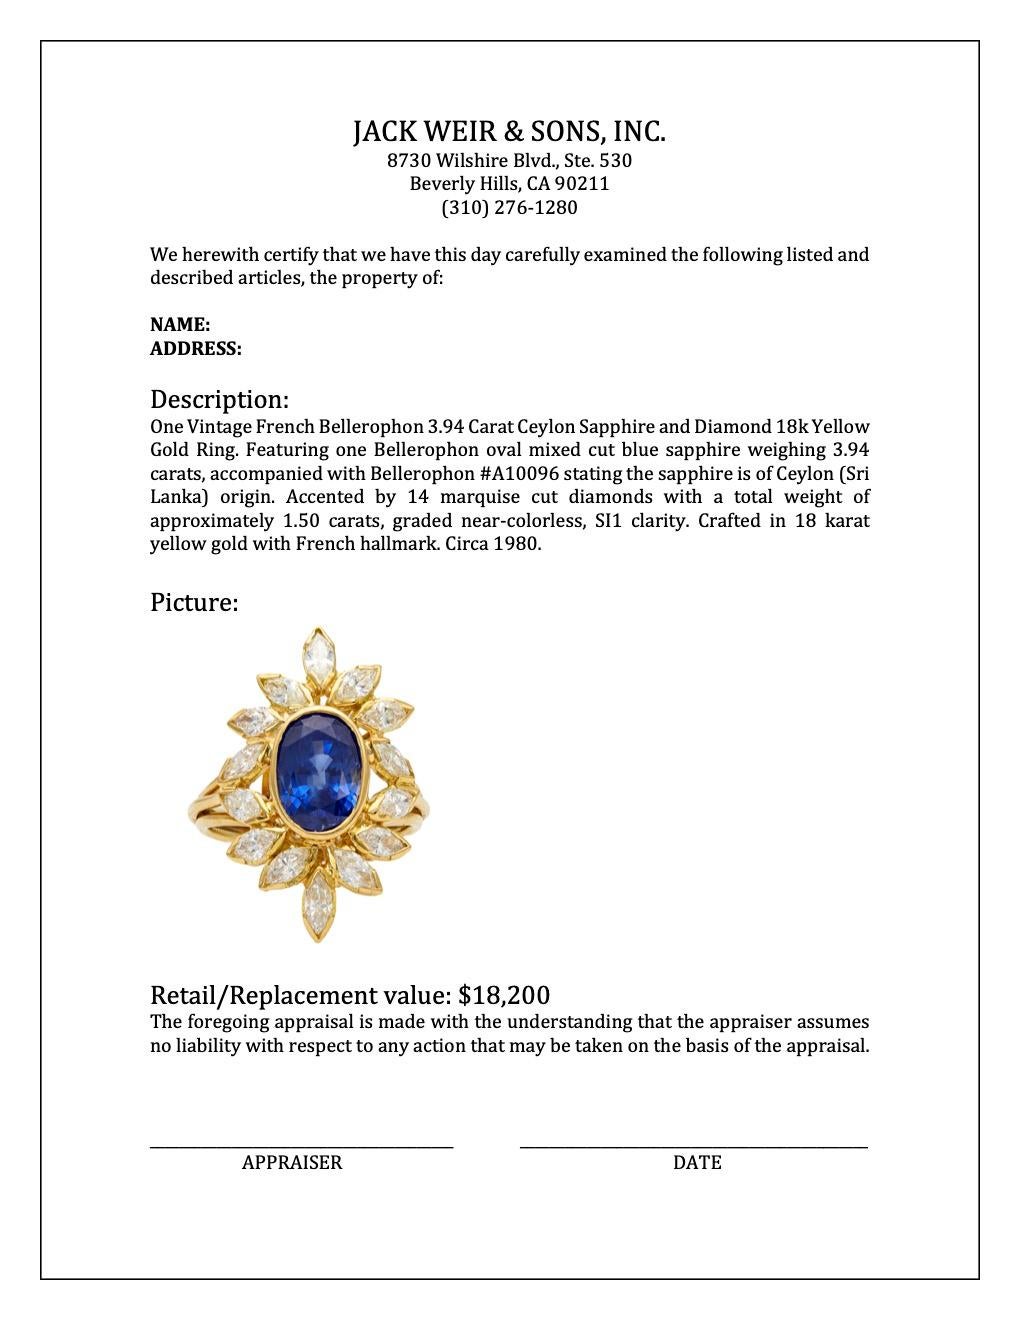 Vintage French Bellerophon 3.94 Carat Ceylon Sapphire Diamond 18k Gold Ring 2